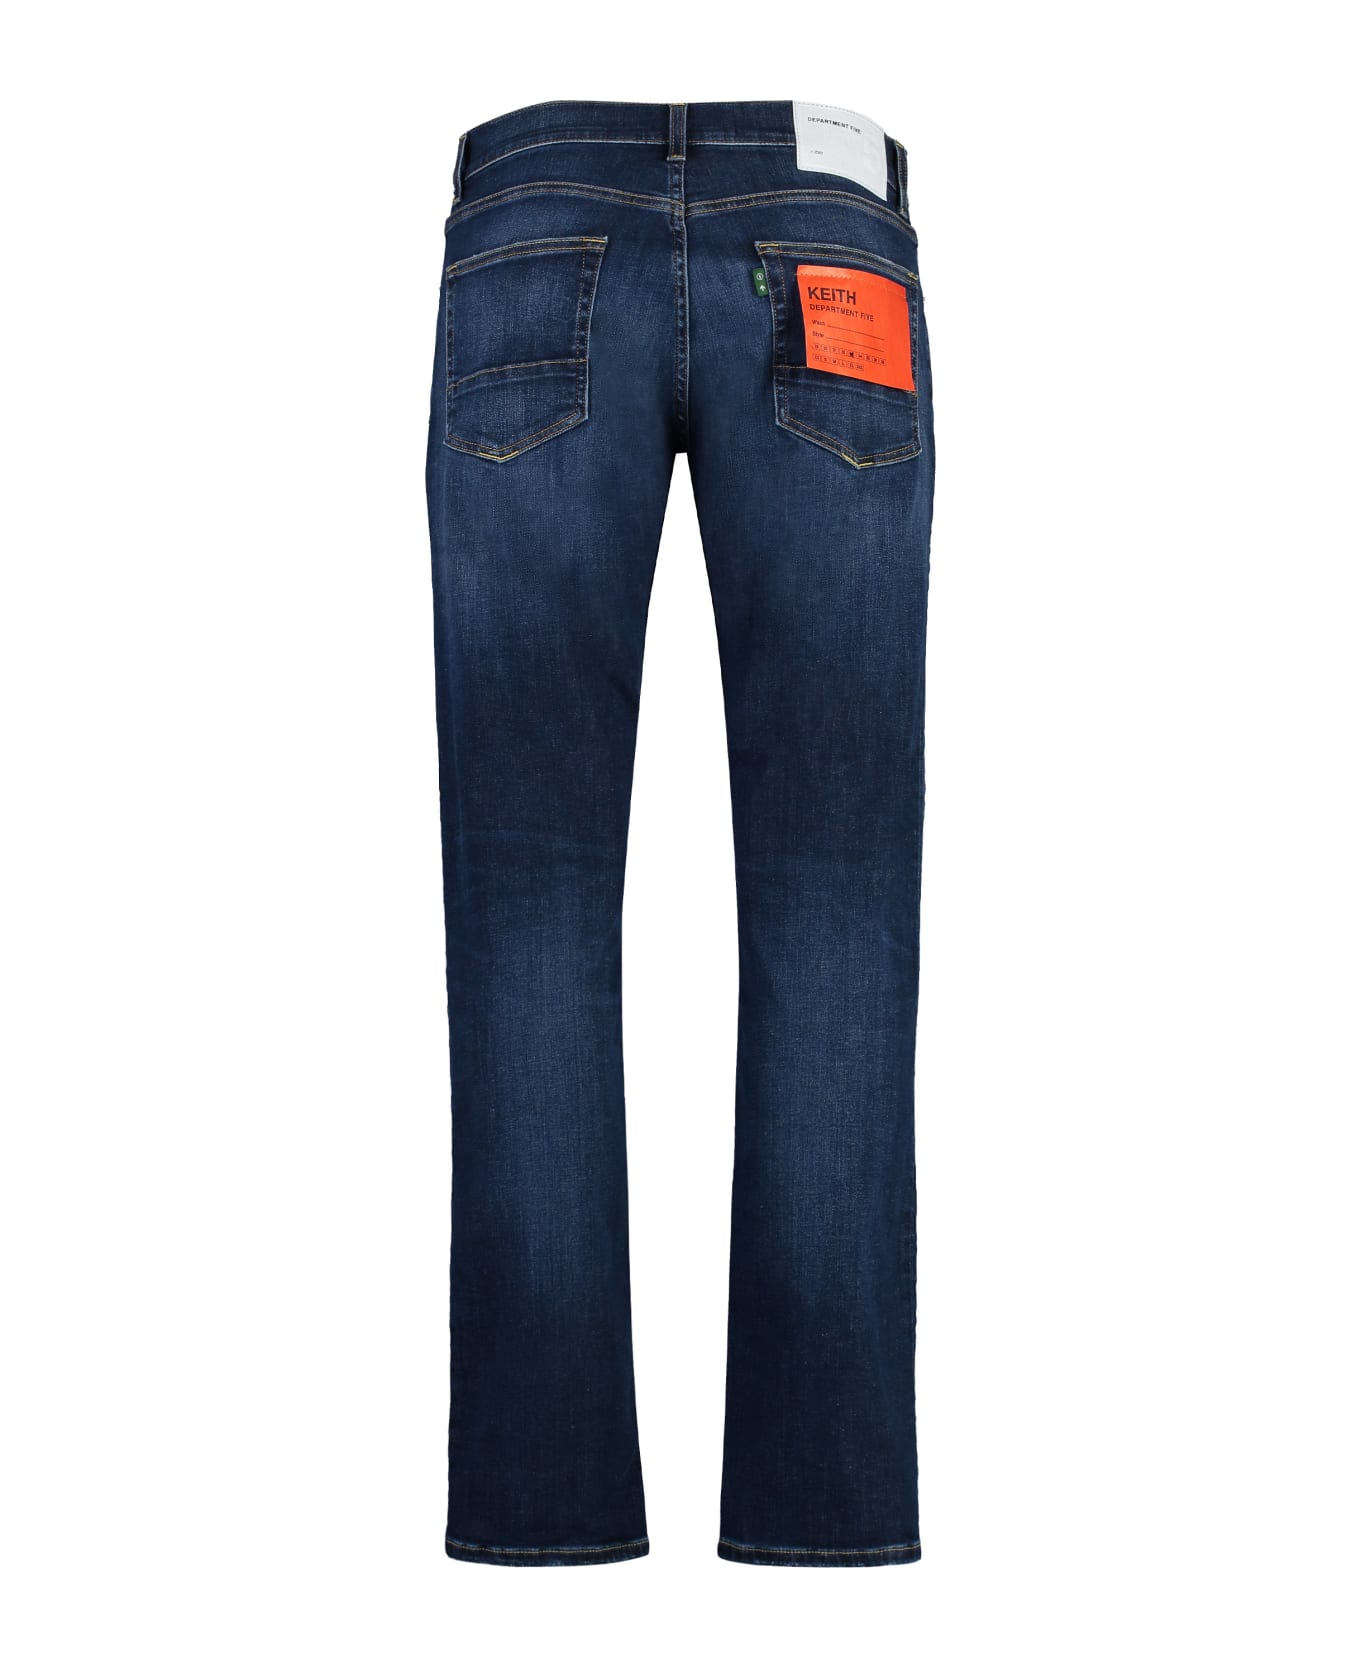 Department Five Keith Slim Fit Jeans - Denim デニム